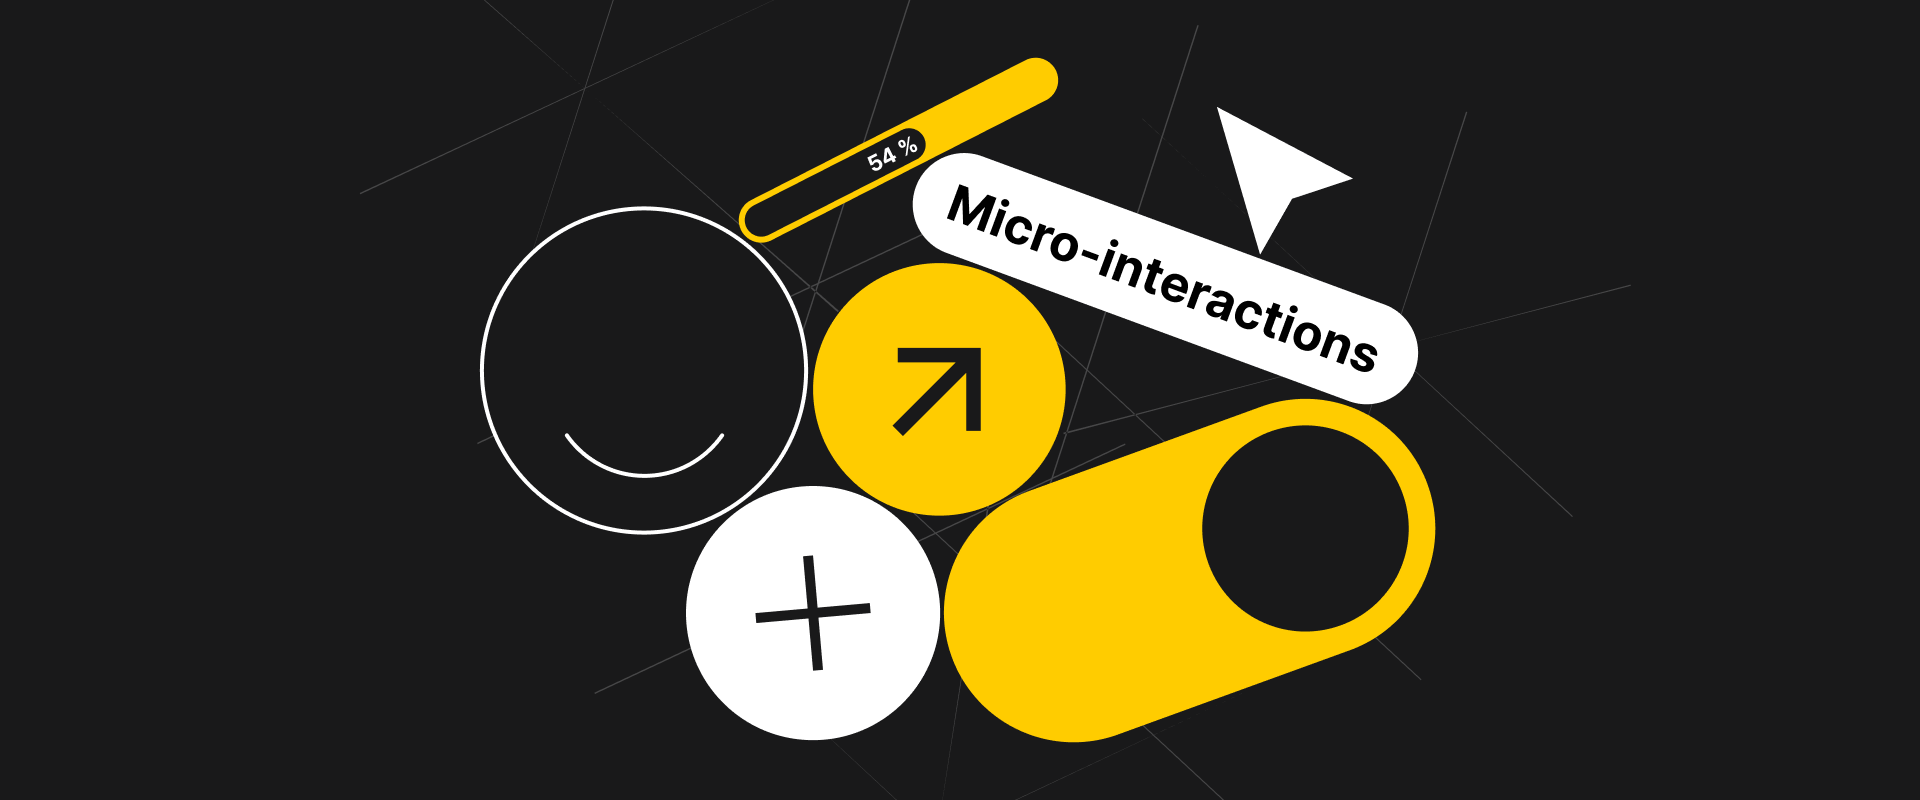 microinteraction design